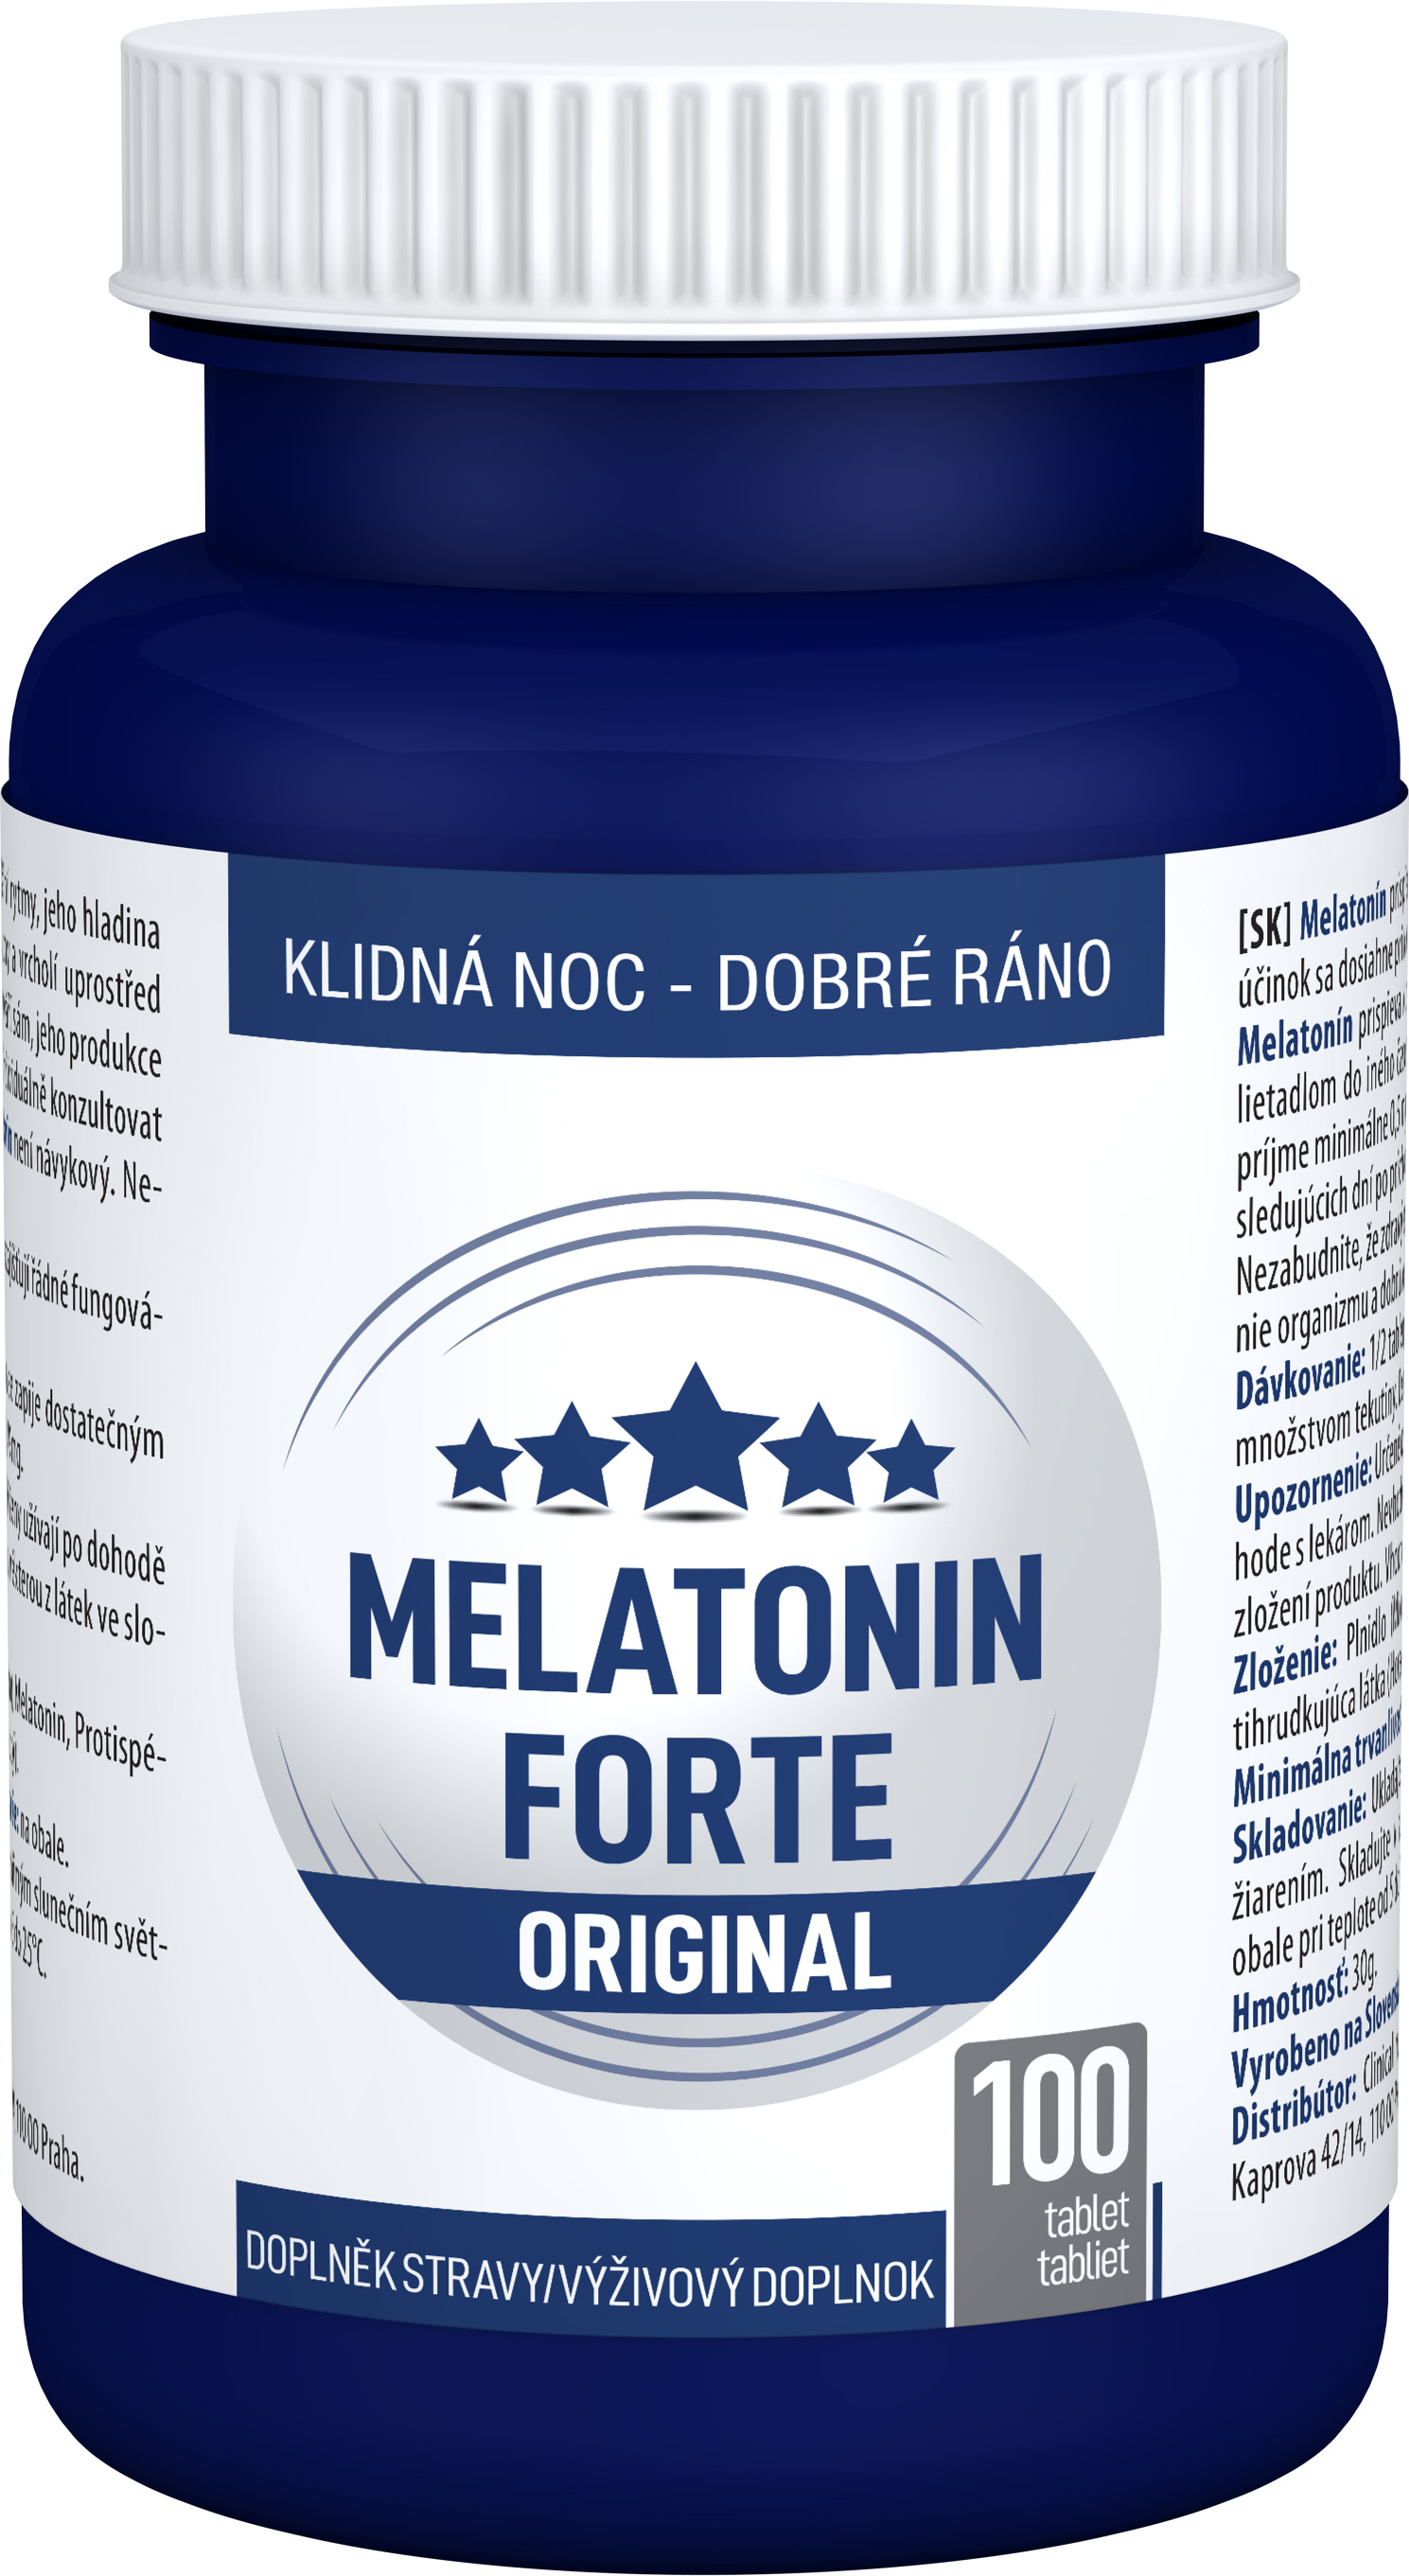 Zobrazit detail výrobku Clinical Melatonin Forte Original 100 tablet